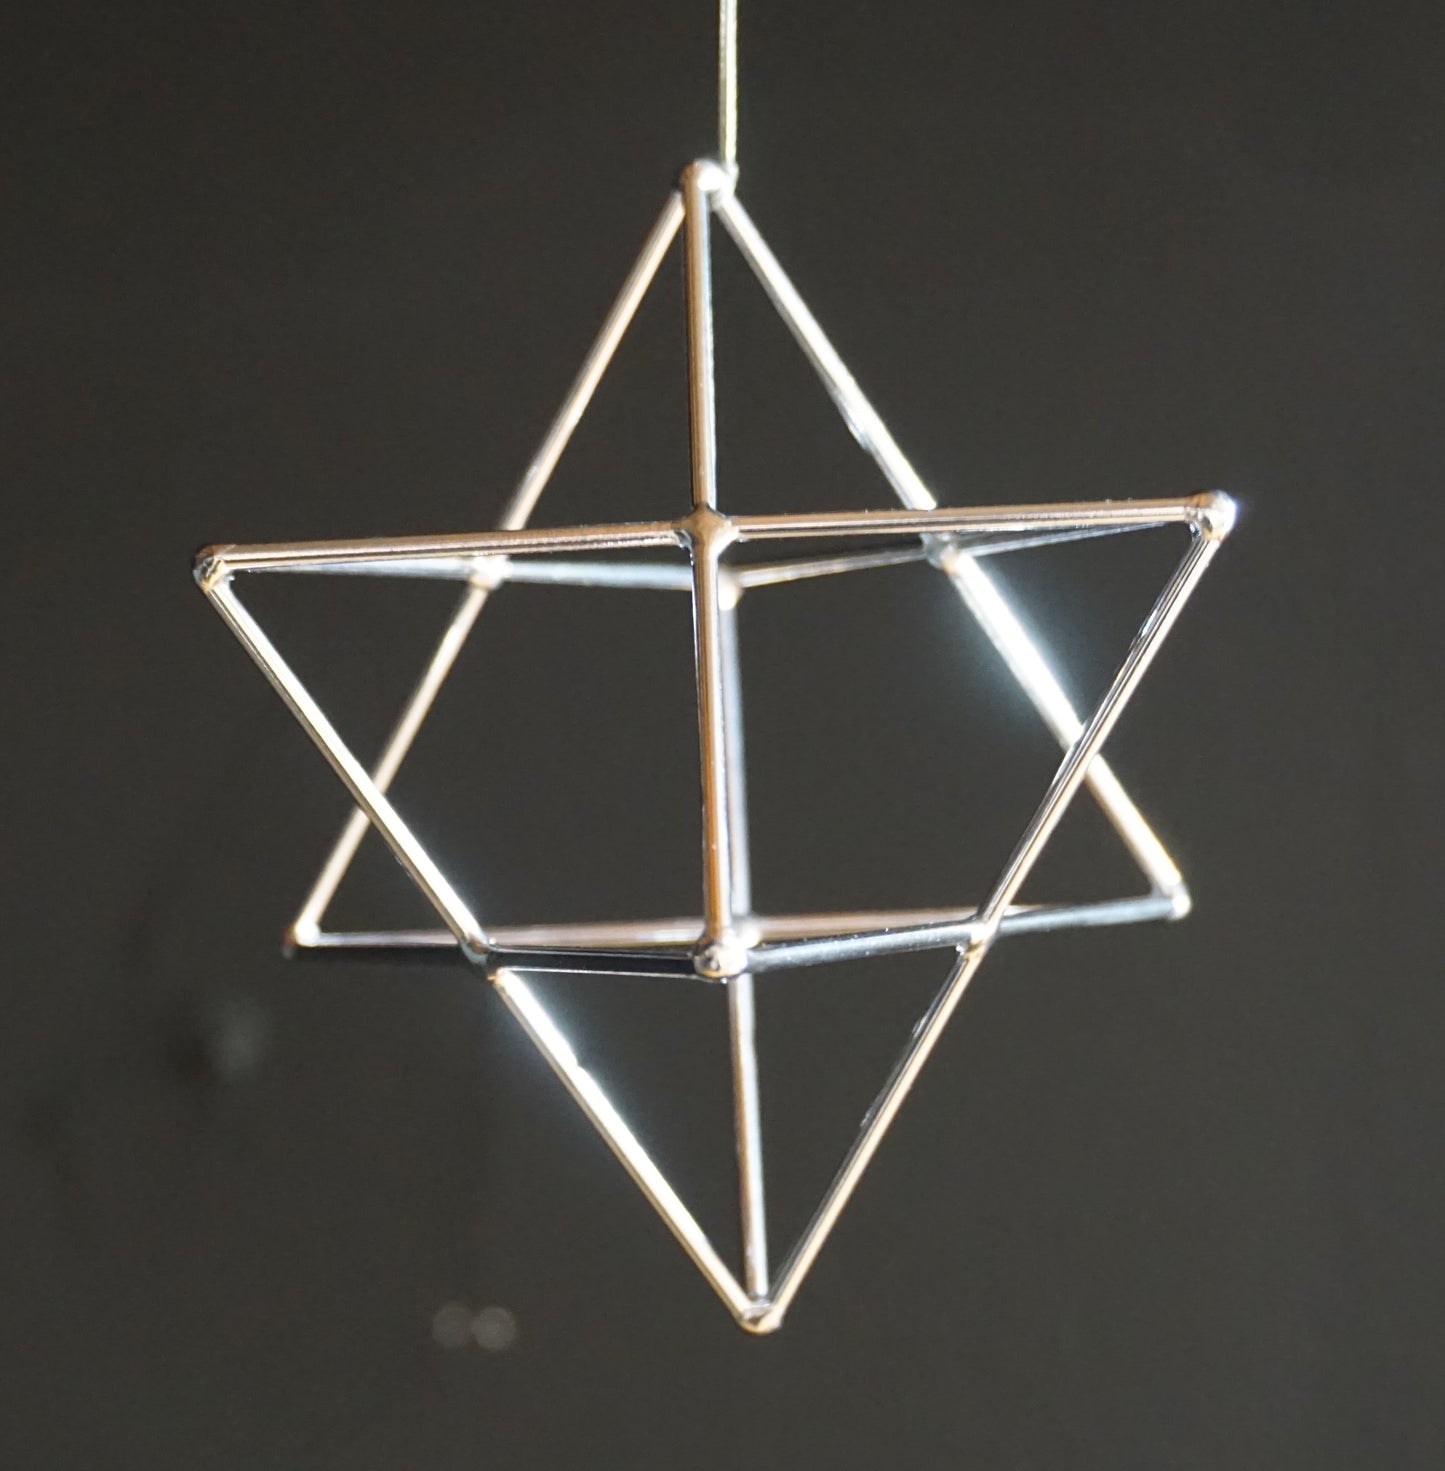 Ref.ST0041 - Star Tetrahedron